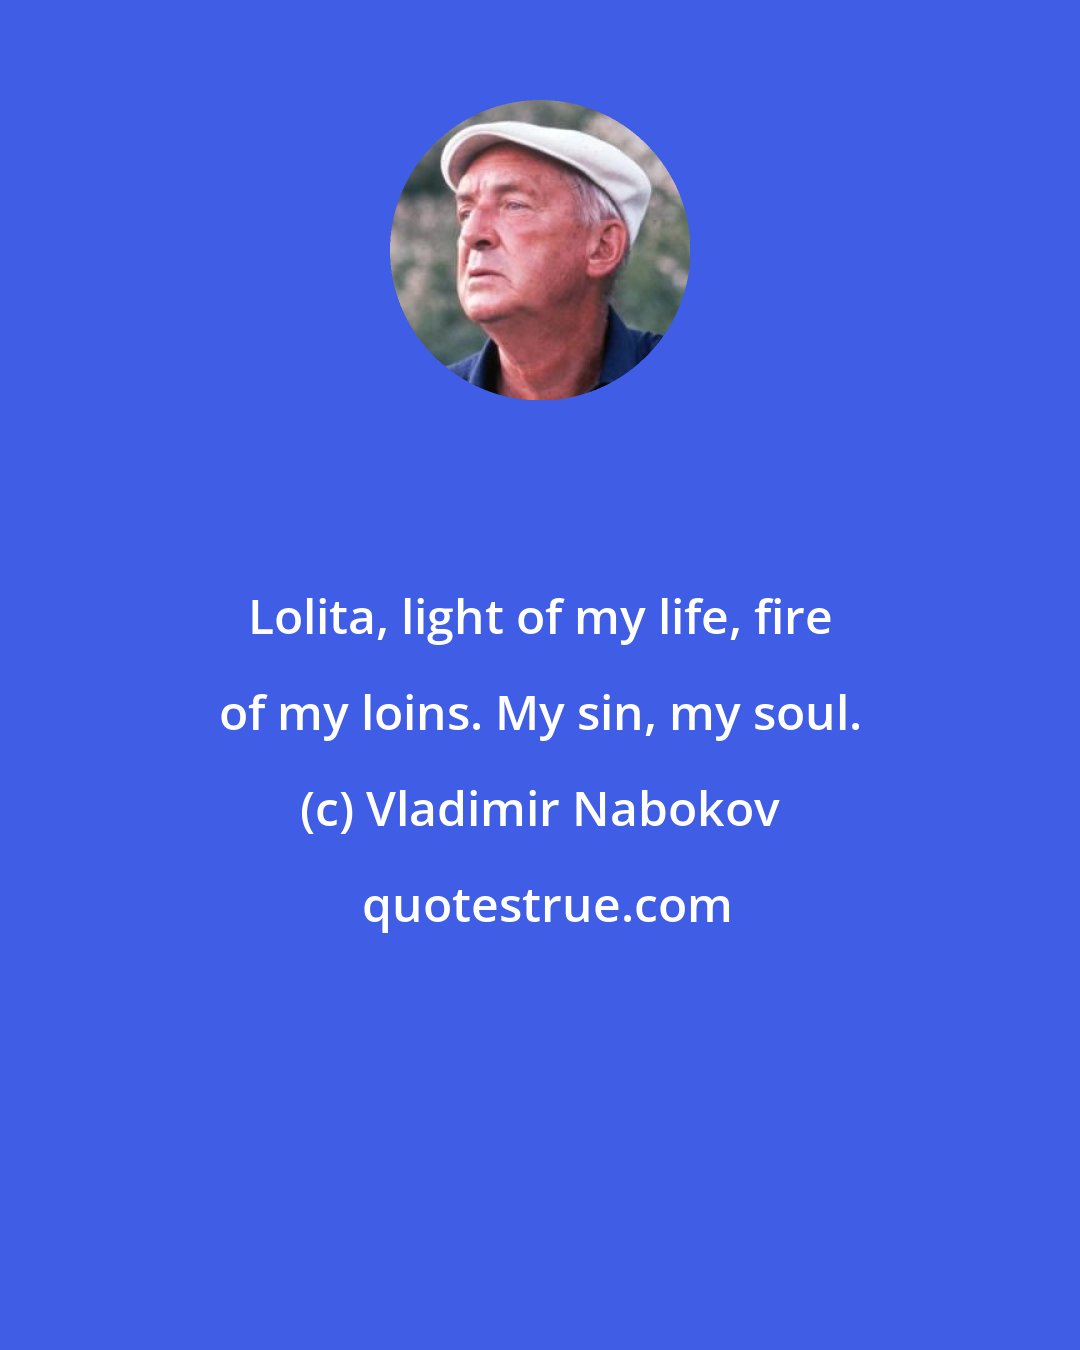 Vladimir Nabokov: Lolita, light of my life, fire of my loins. My sin, my soul.